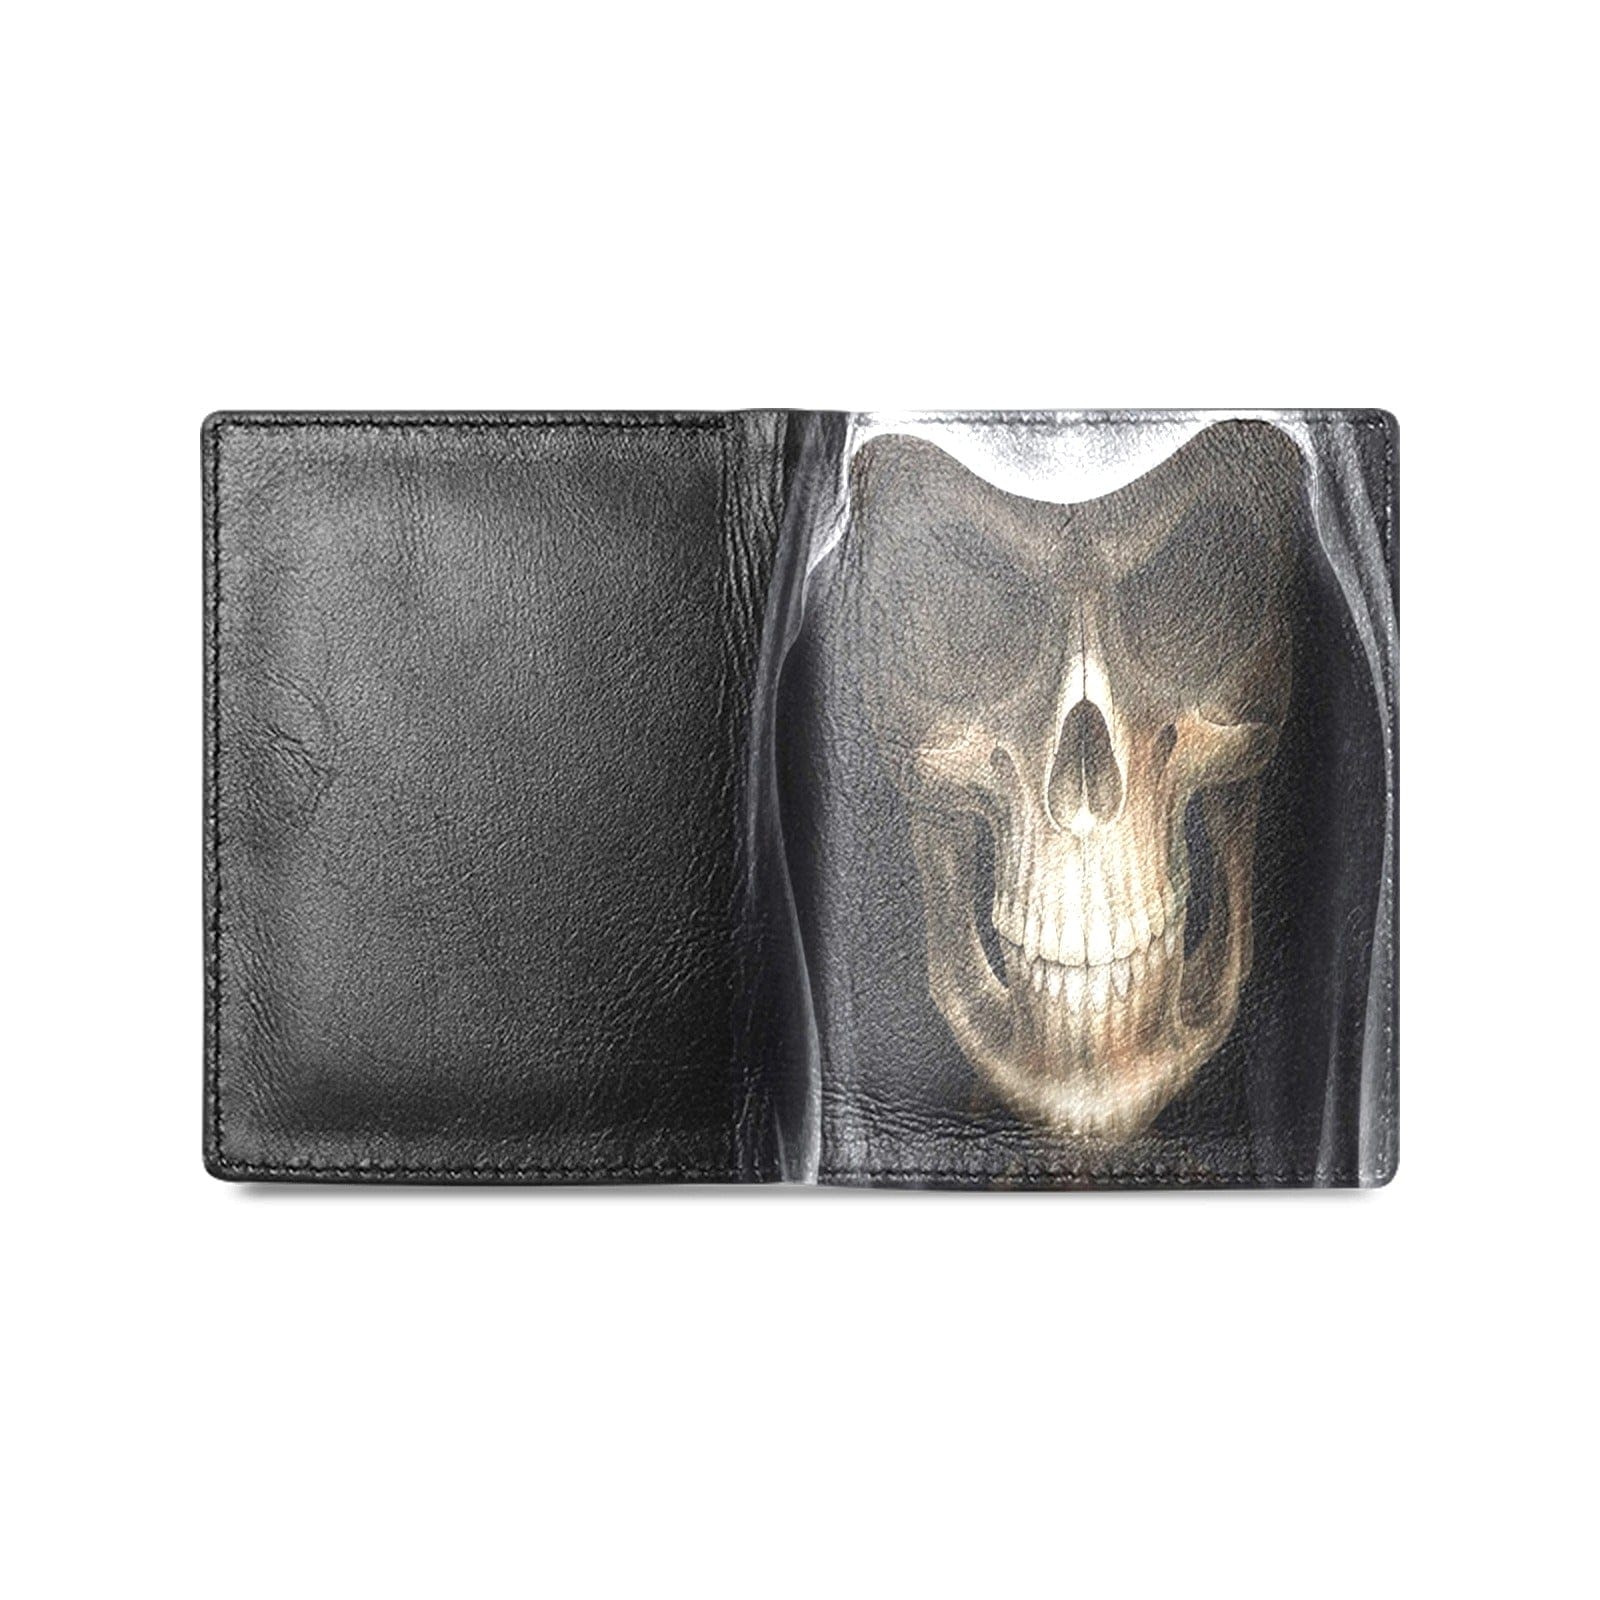 Greamreaper Skull Men's Leather Wallet